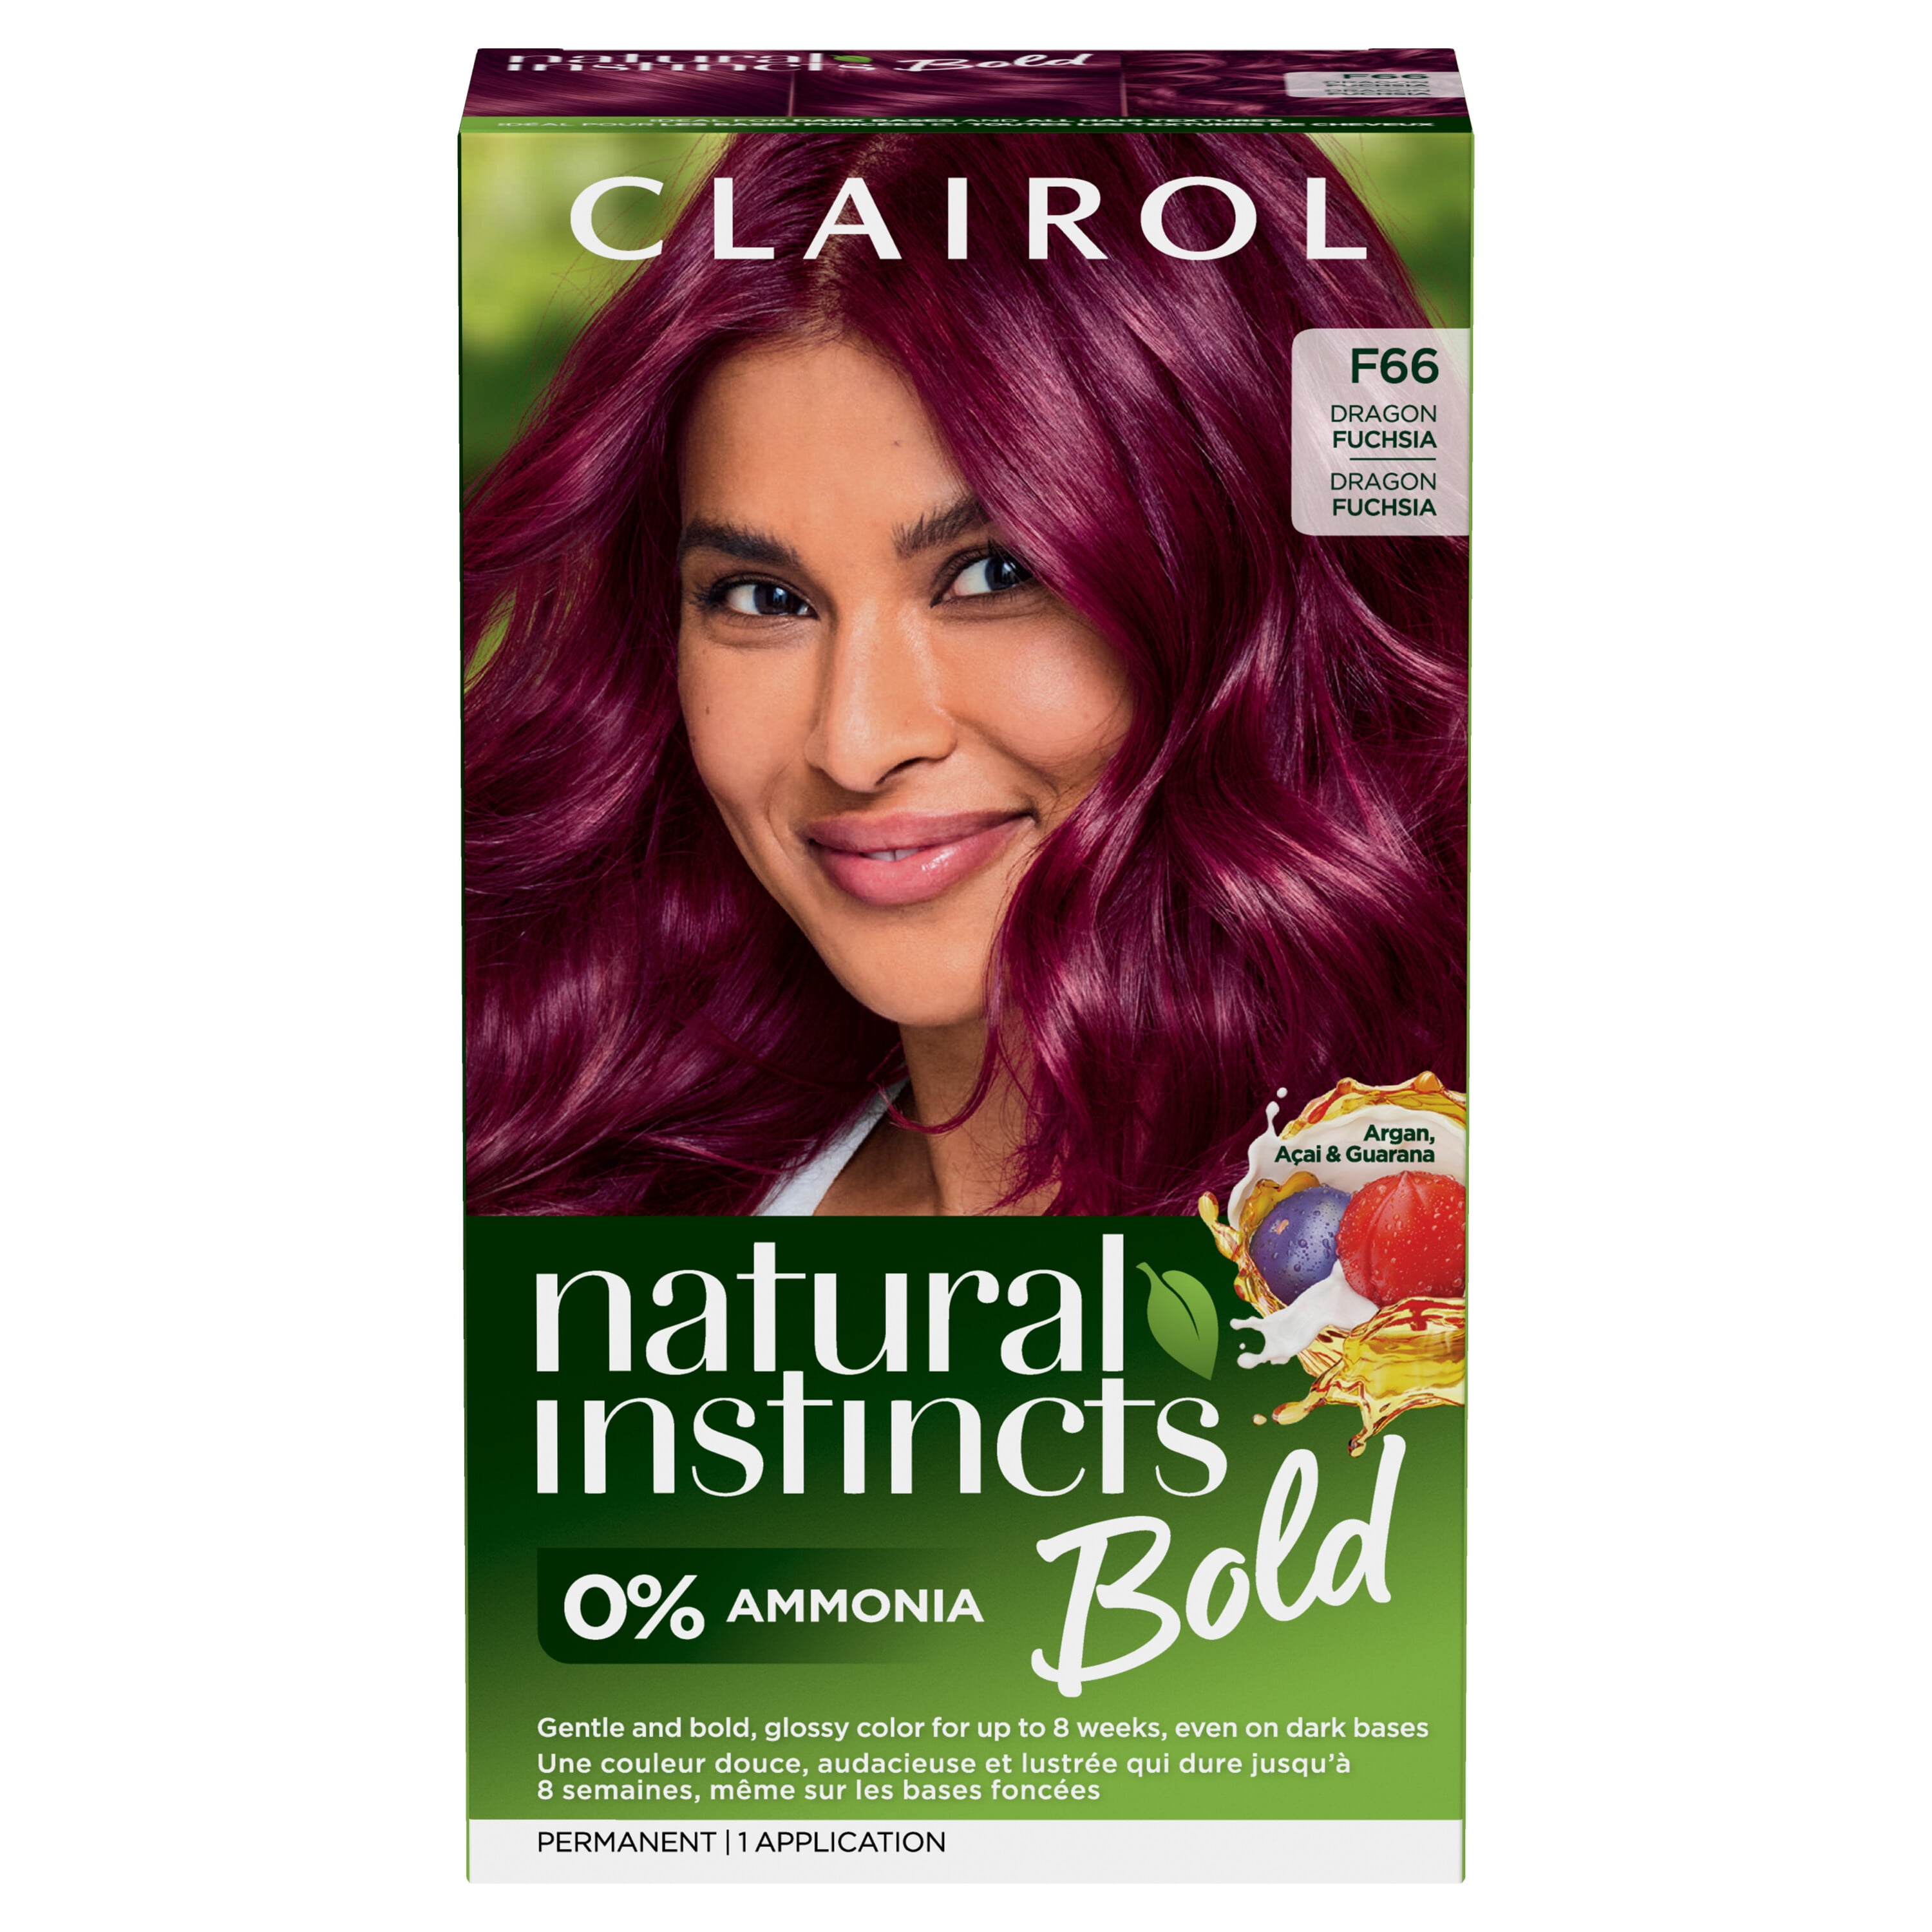 Clairol Natural Instincts Bold, Permanent Hair Color, F66 Dragon Fuchsia, 1  Application, Hair Dye 